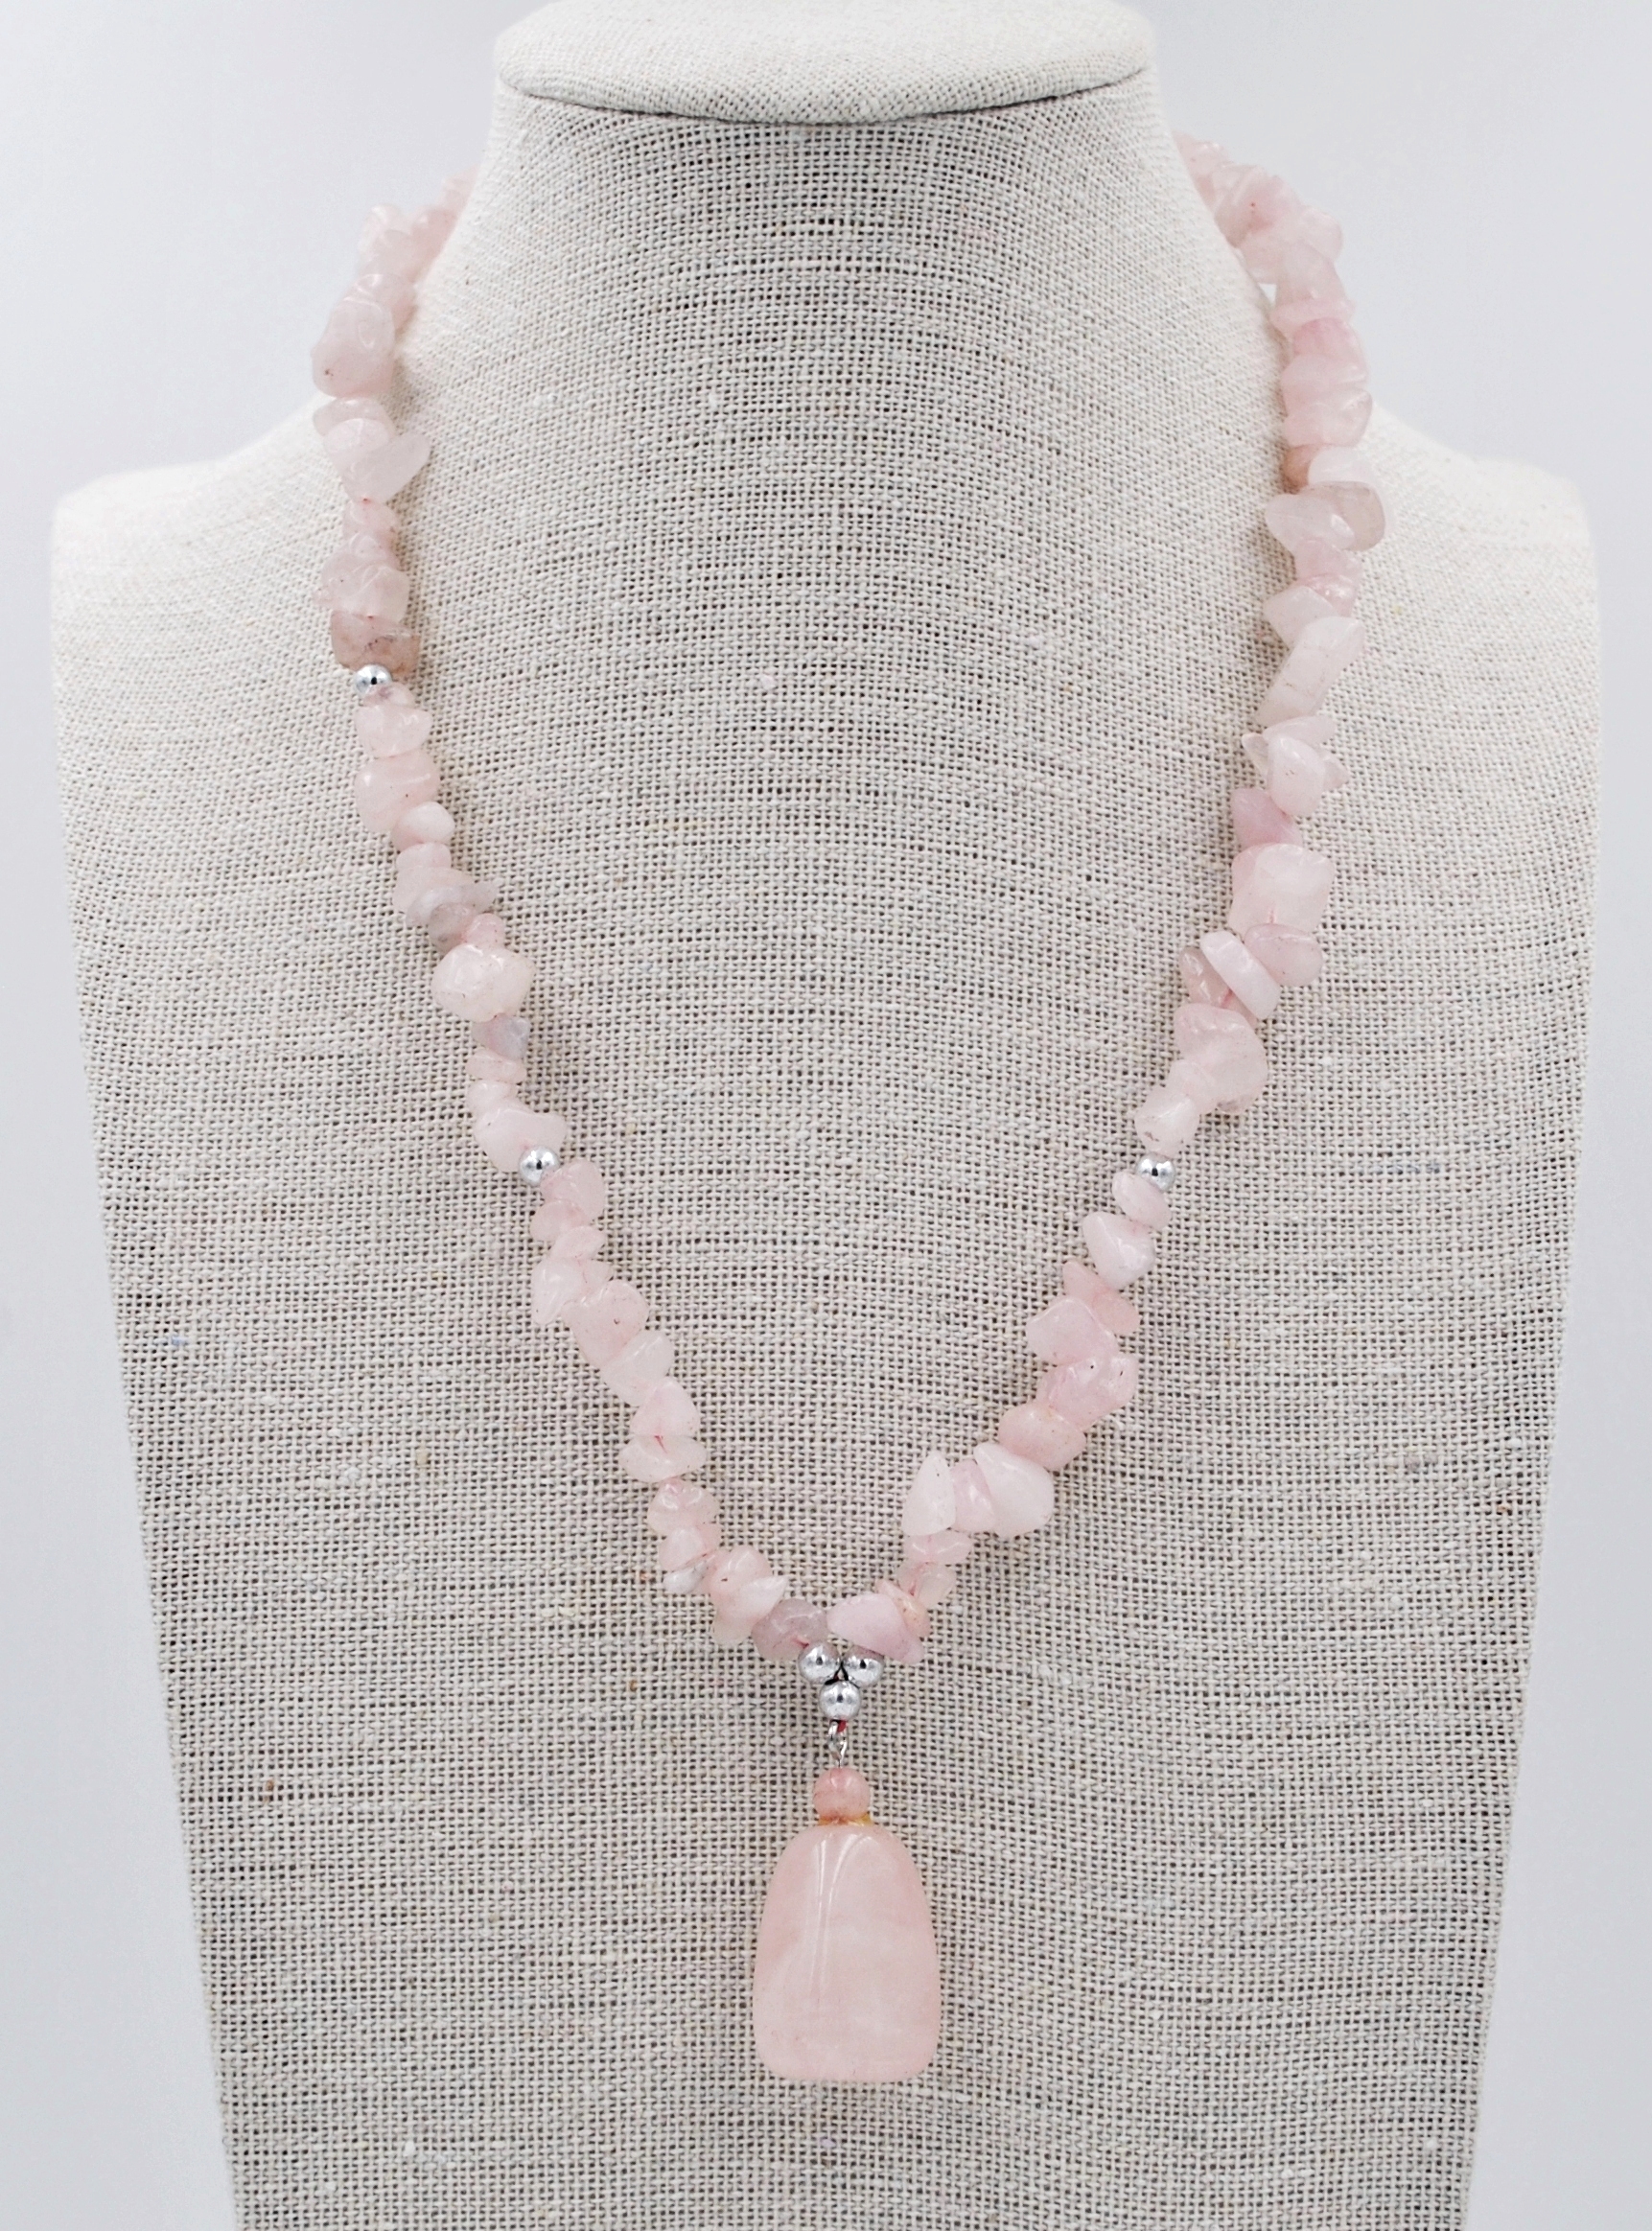 18" Rose Quartz Chip Stone Necklace With Nugget Pendant